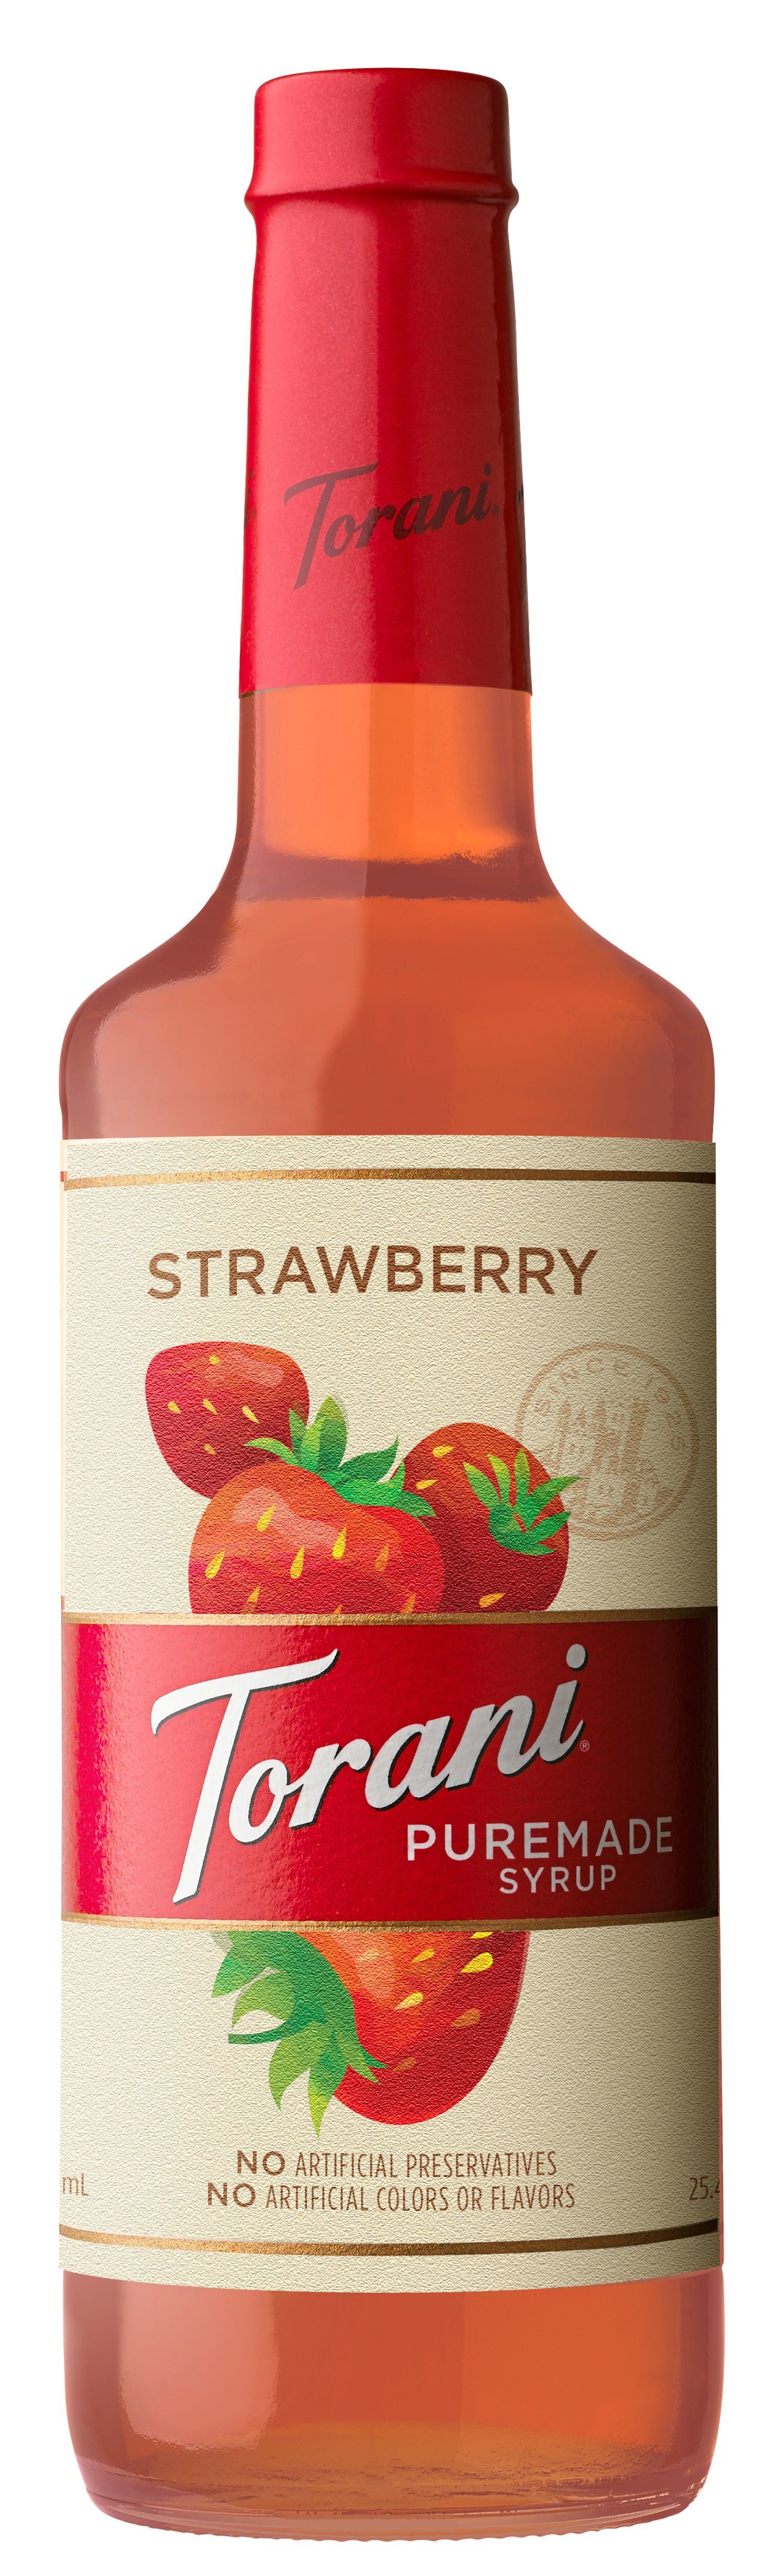 Torani - Puremade Syrup Strawberry